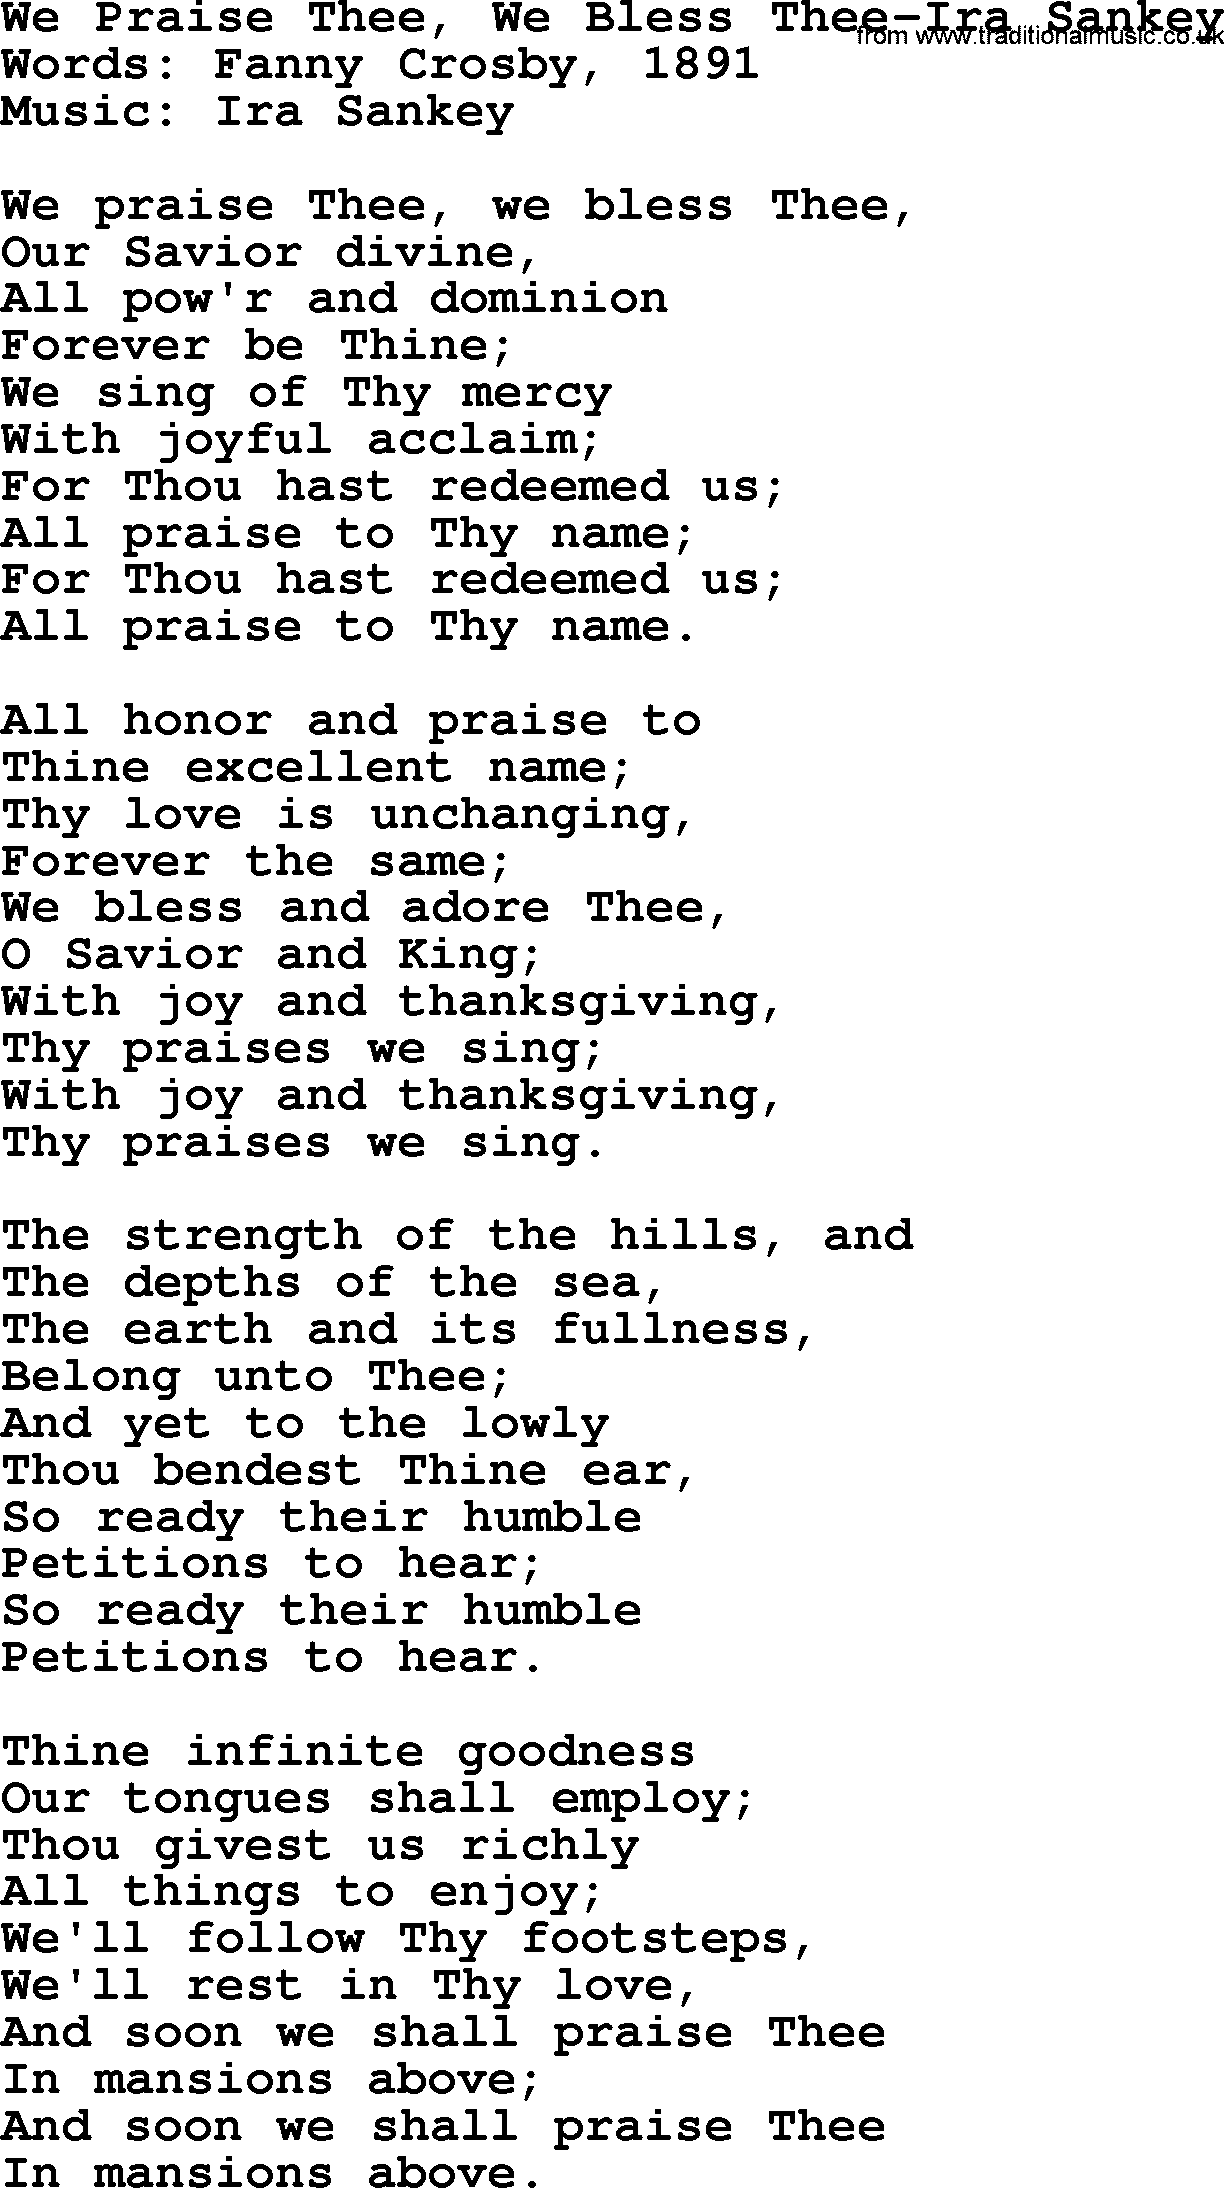 Ira Sankey hymn: We Praise Thee, We Bless Thee-Ira Sankey, lyrics